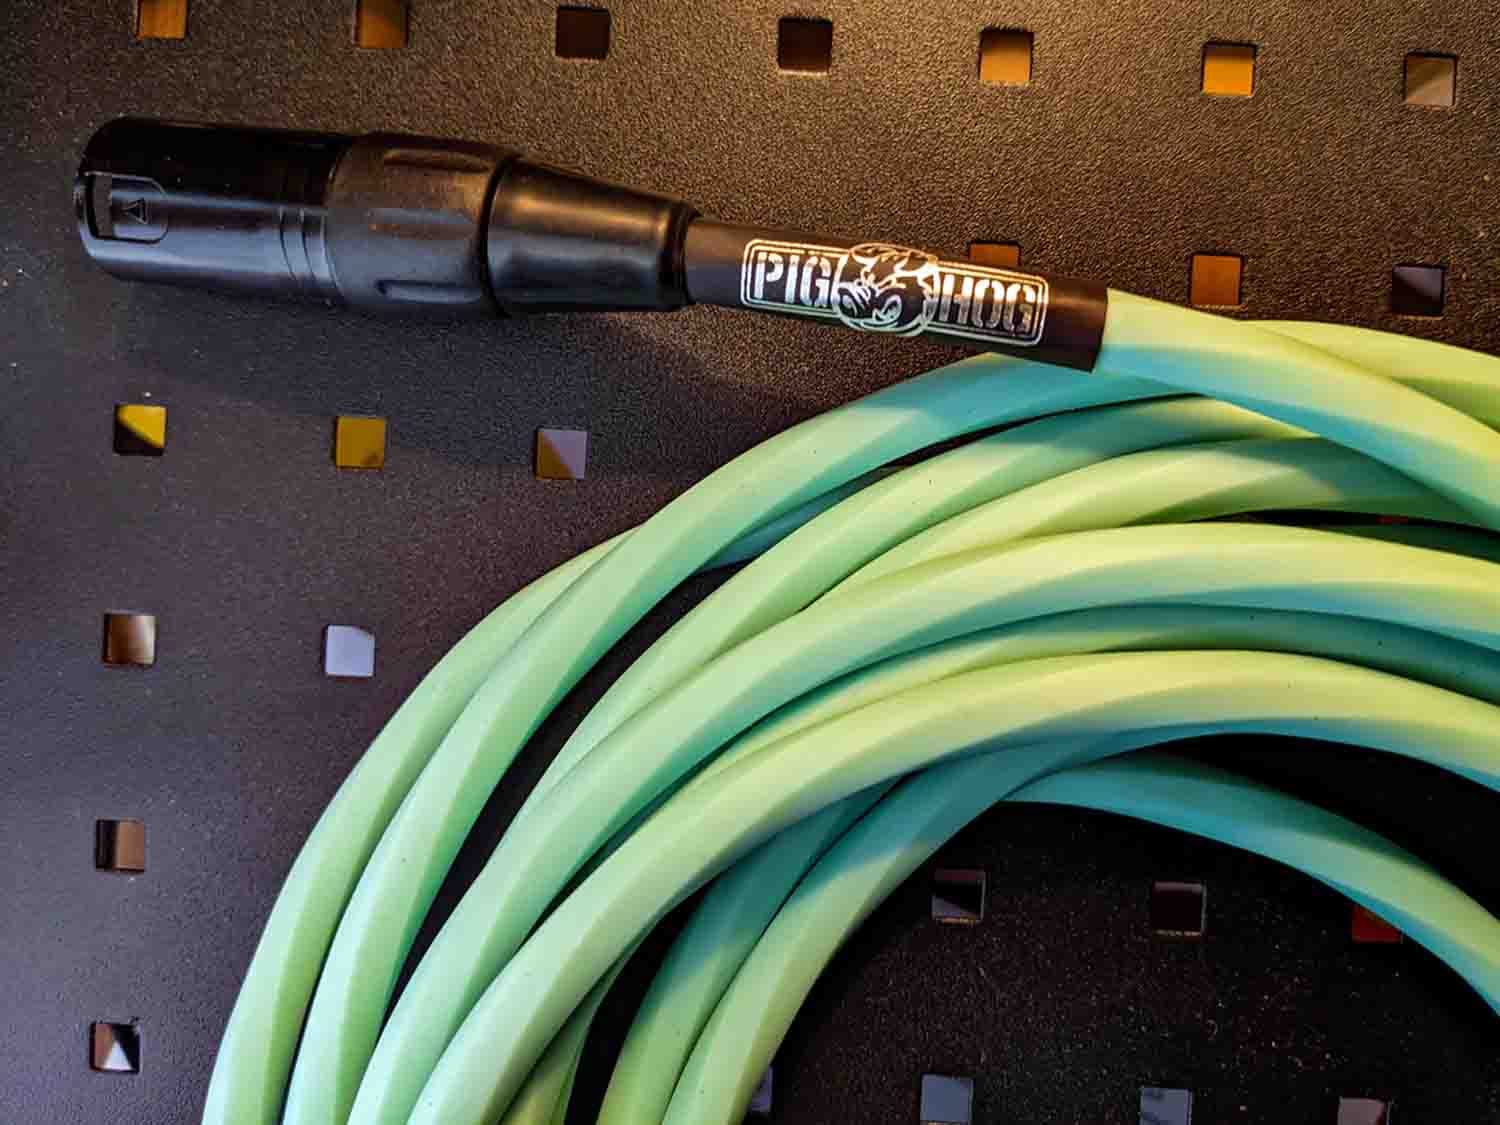 Pig Hog PHMH15SG, Hex Series Mic Cables (Seafoam Green, 15ft) - Hollywood DJ